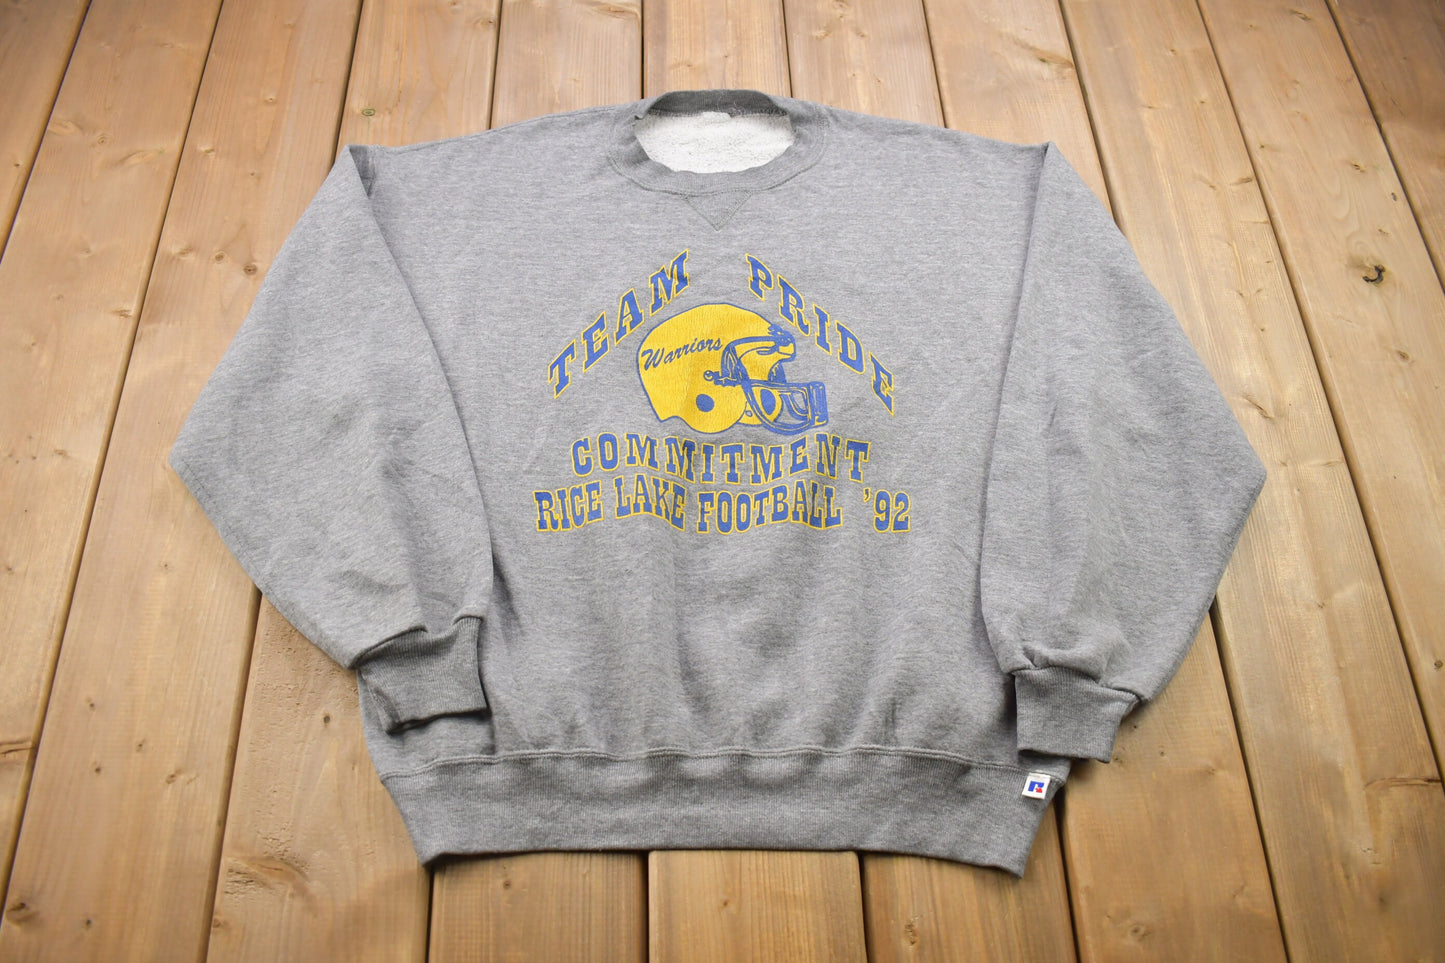 Vintage 1990s Russell Athletic Rice Lake Crewneck Sweatshirt / 90s Crewneck / Souvenir / Athleisure / Streetwear / Football Vintage